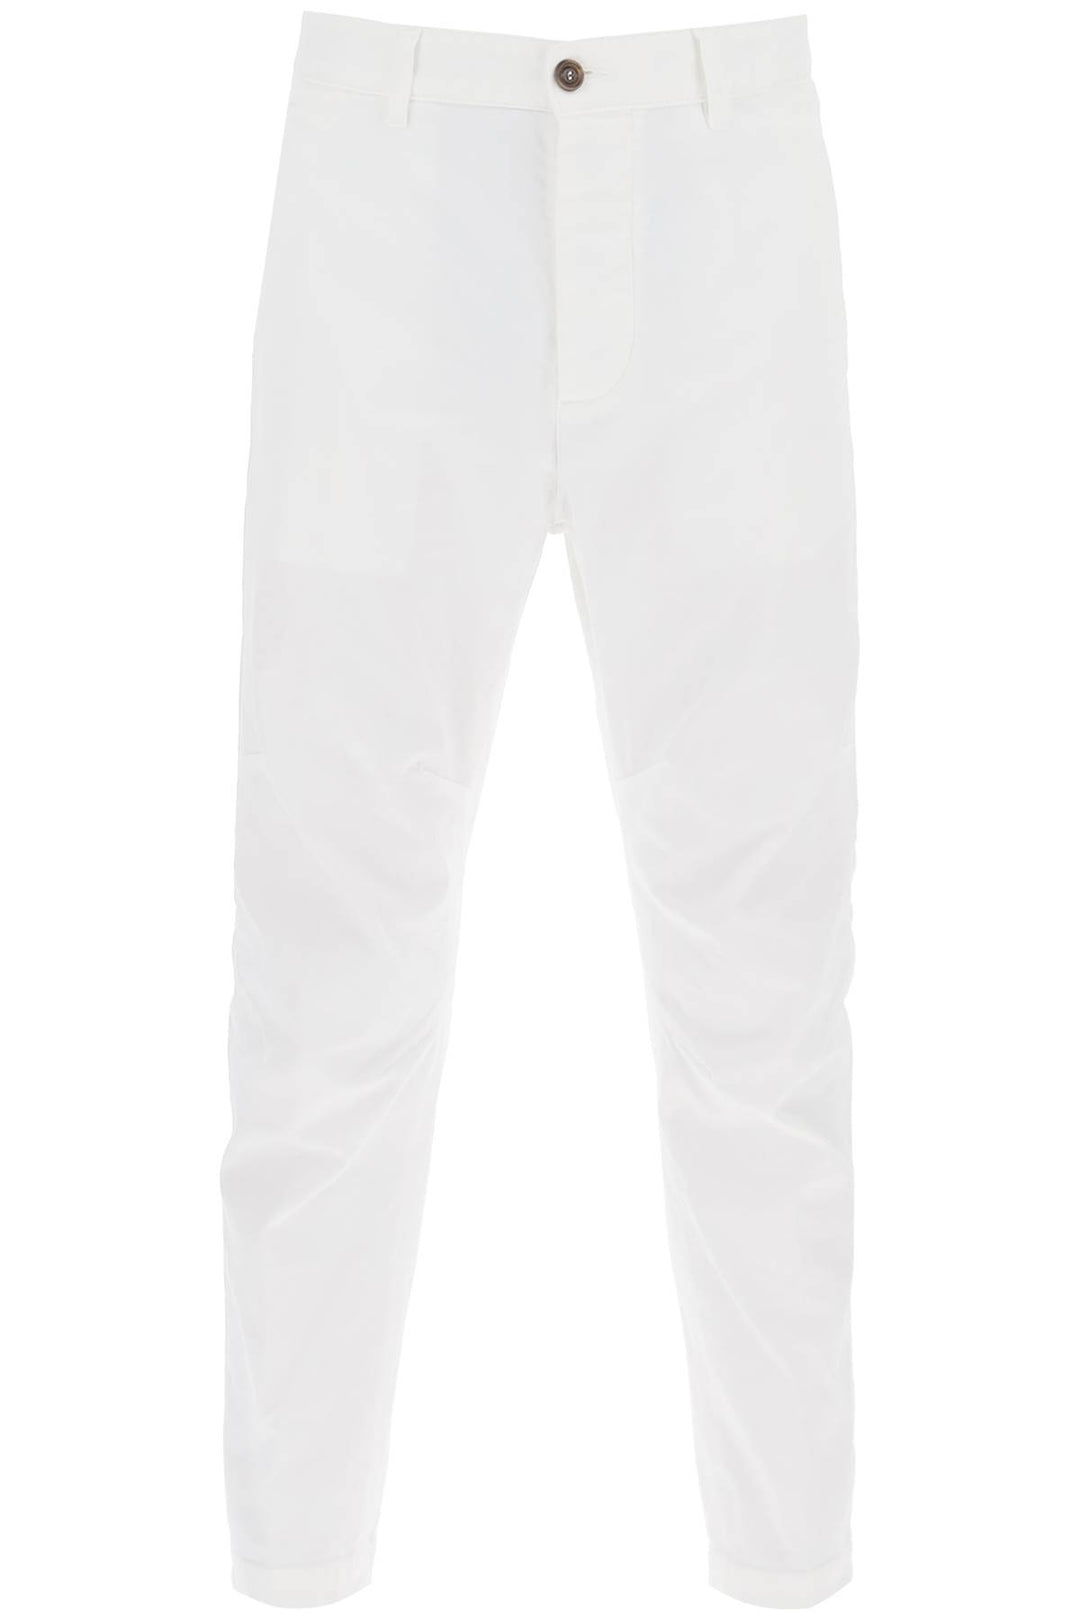 Dsquared2 Sexy Chino Pants   Bianco